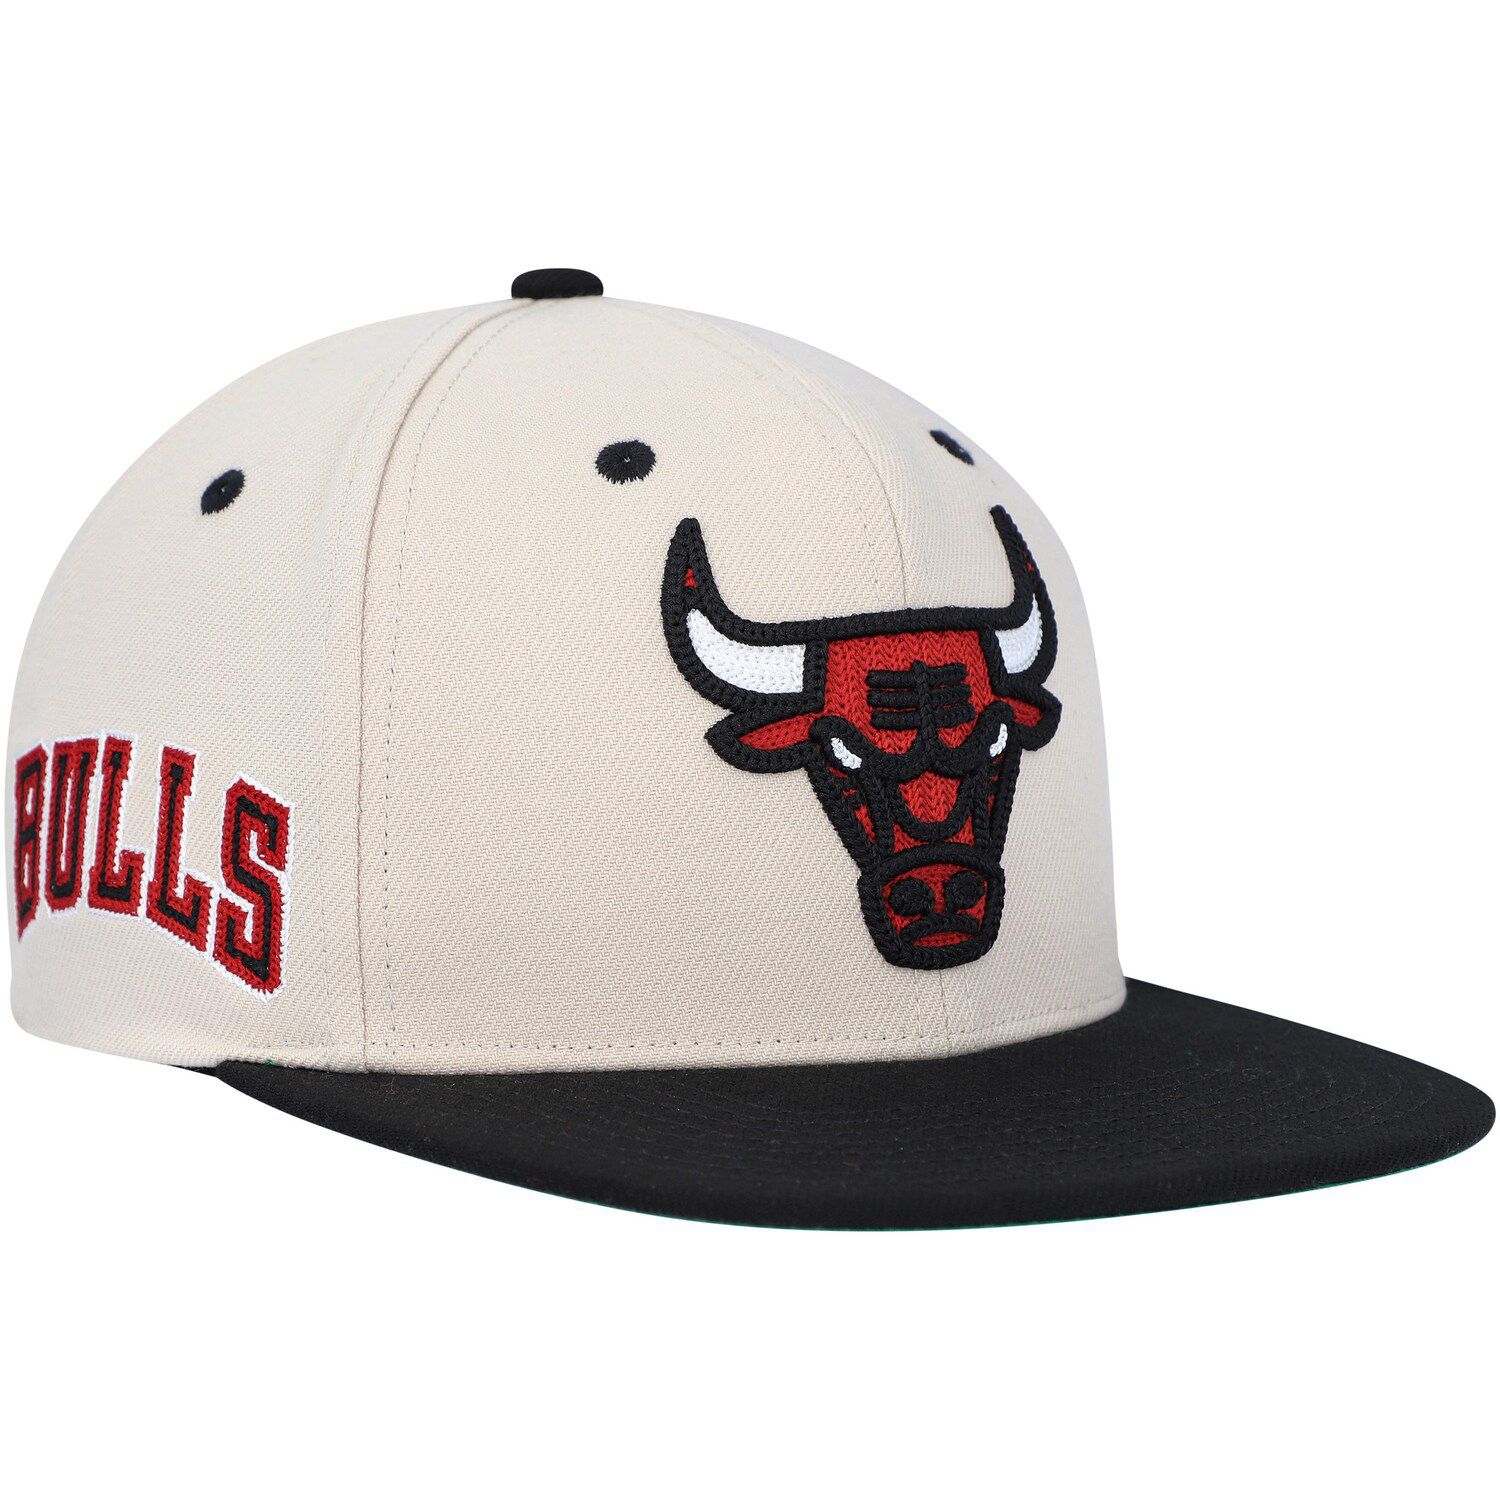 Chicago Bulls Dead Stock Vintage Snapback Hat Cap Old School Black